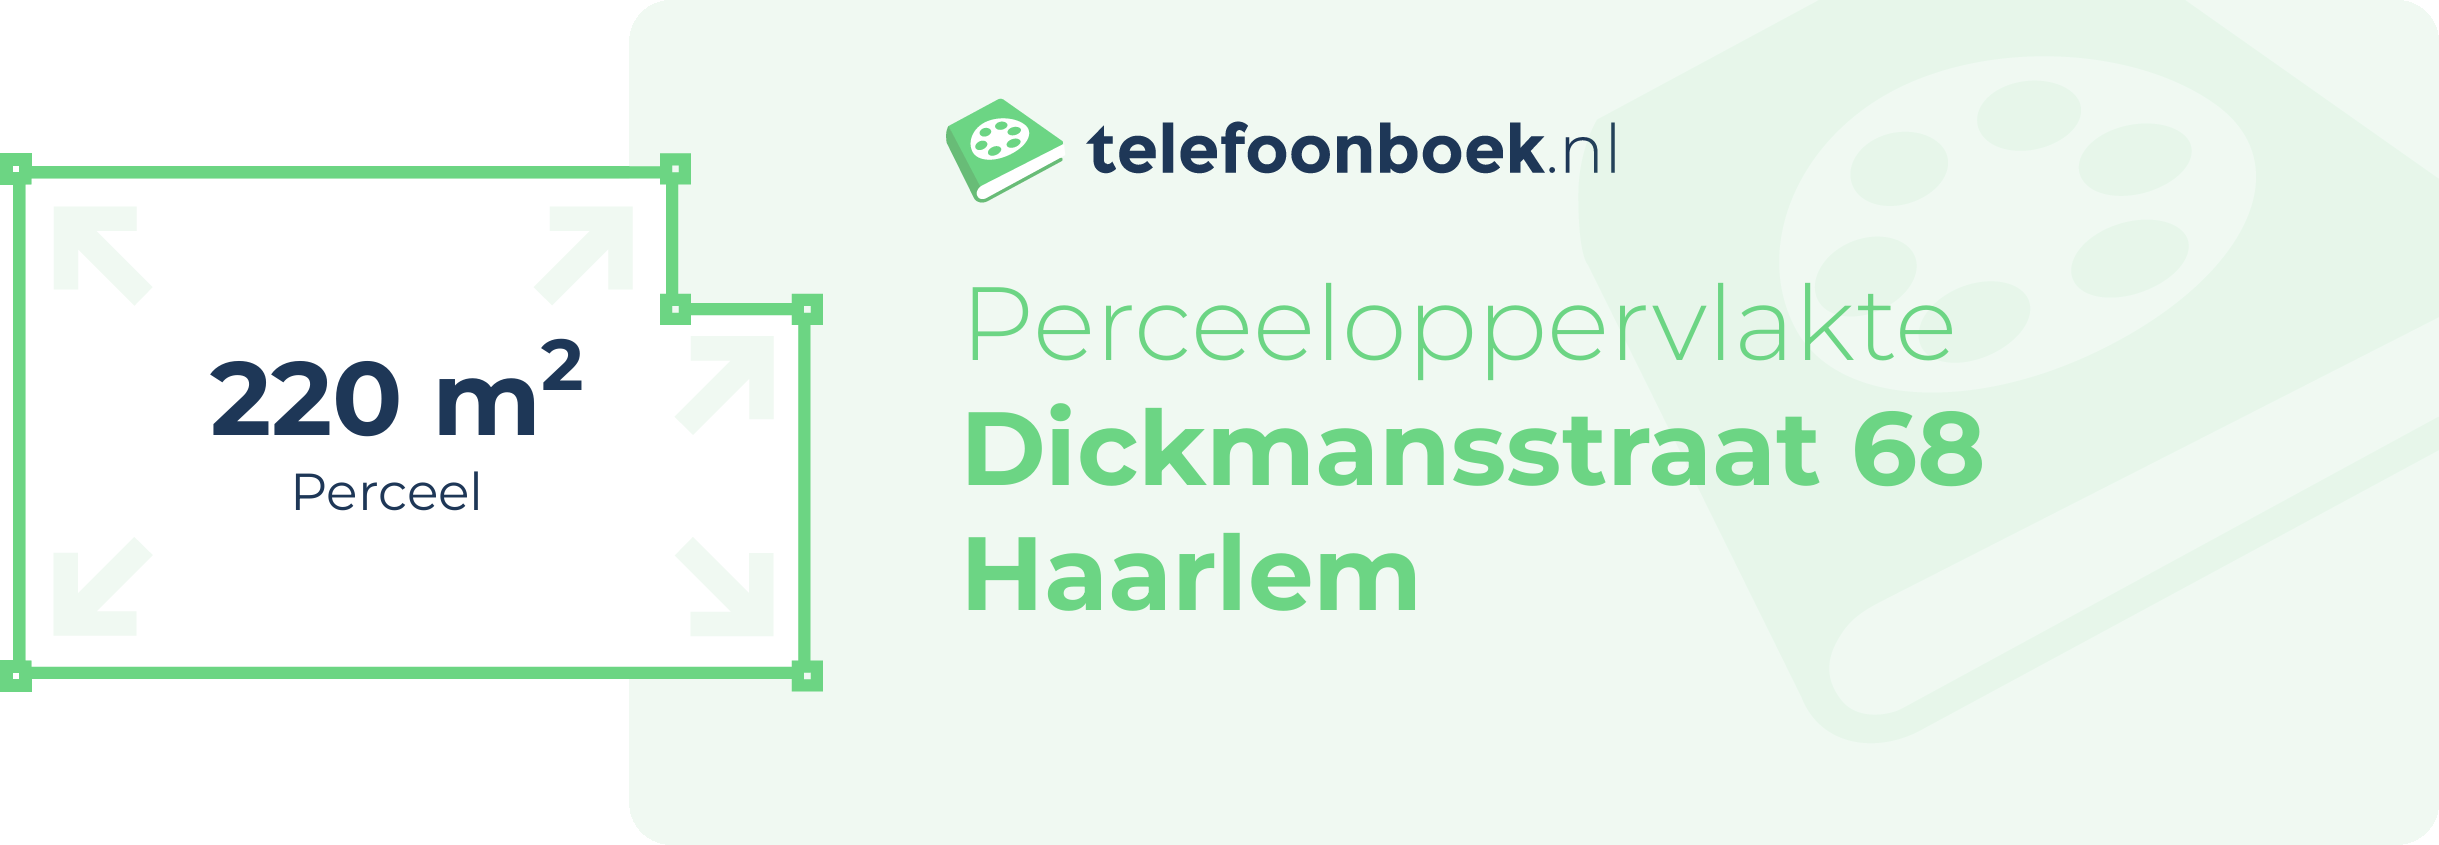 Perceeloppervlakte Dickmansstraat 68 Haarlem